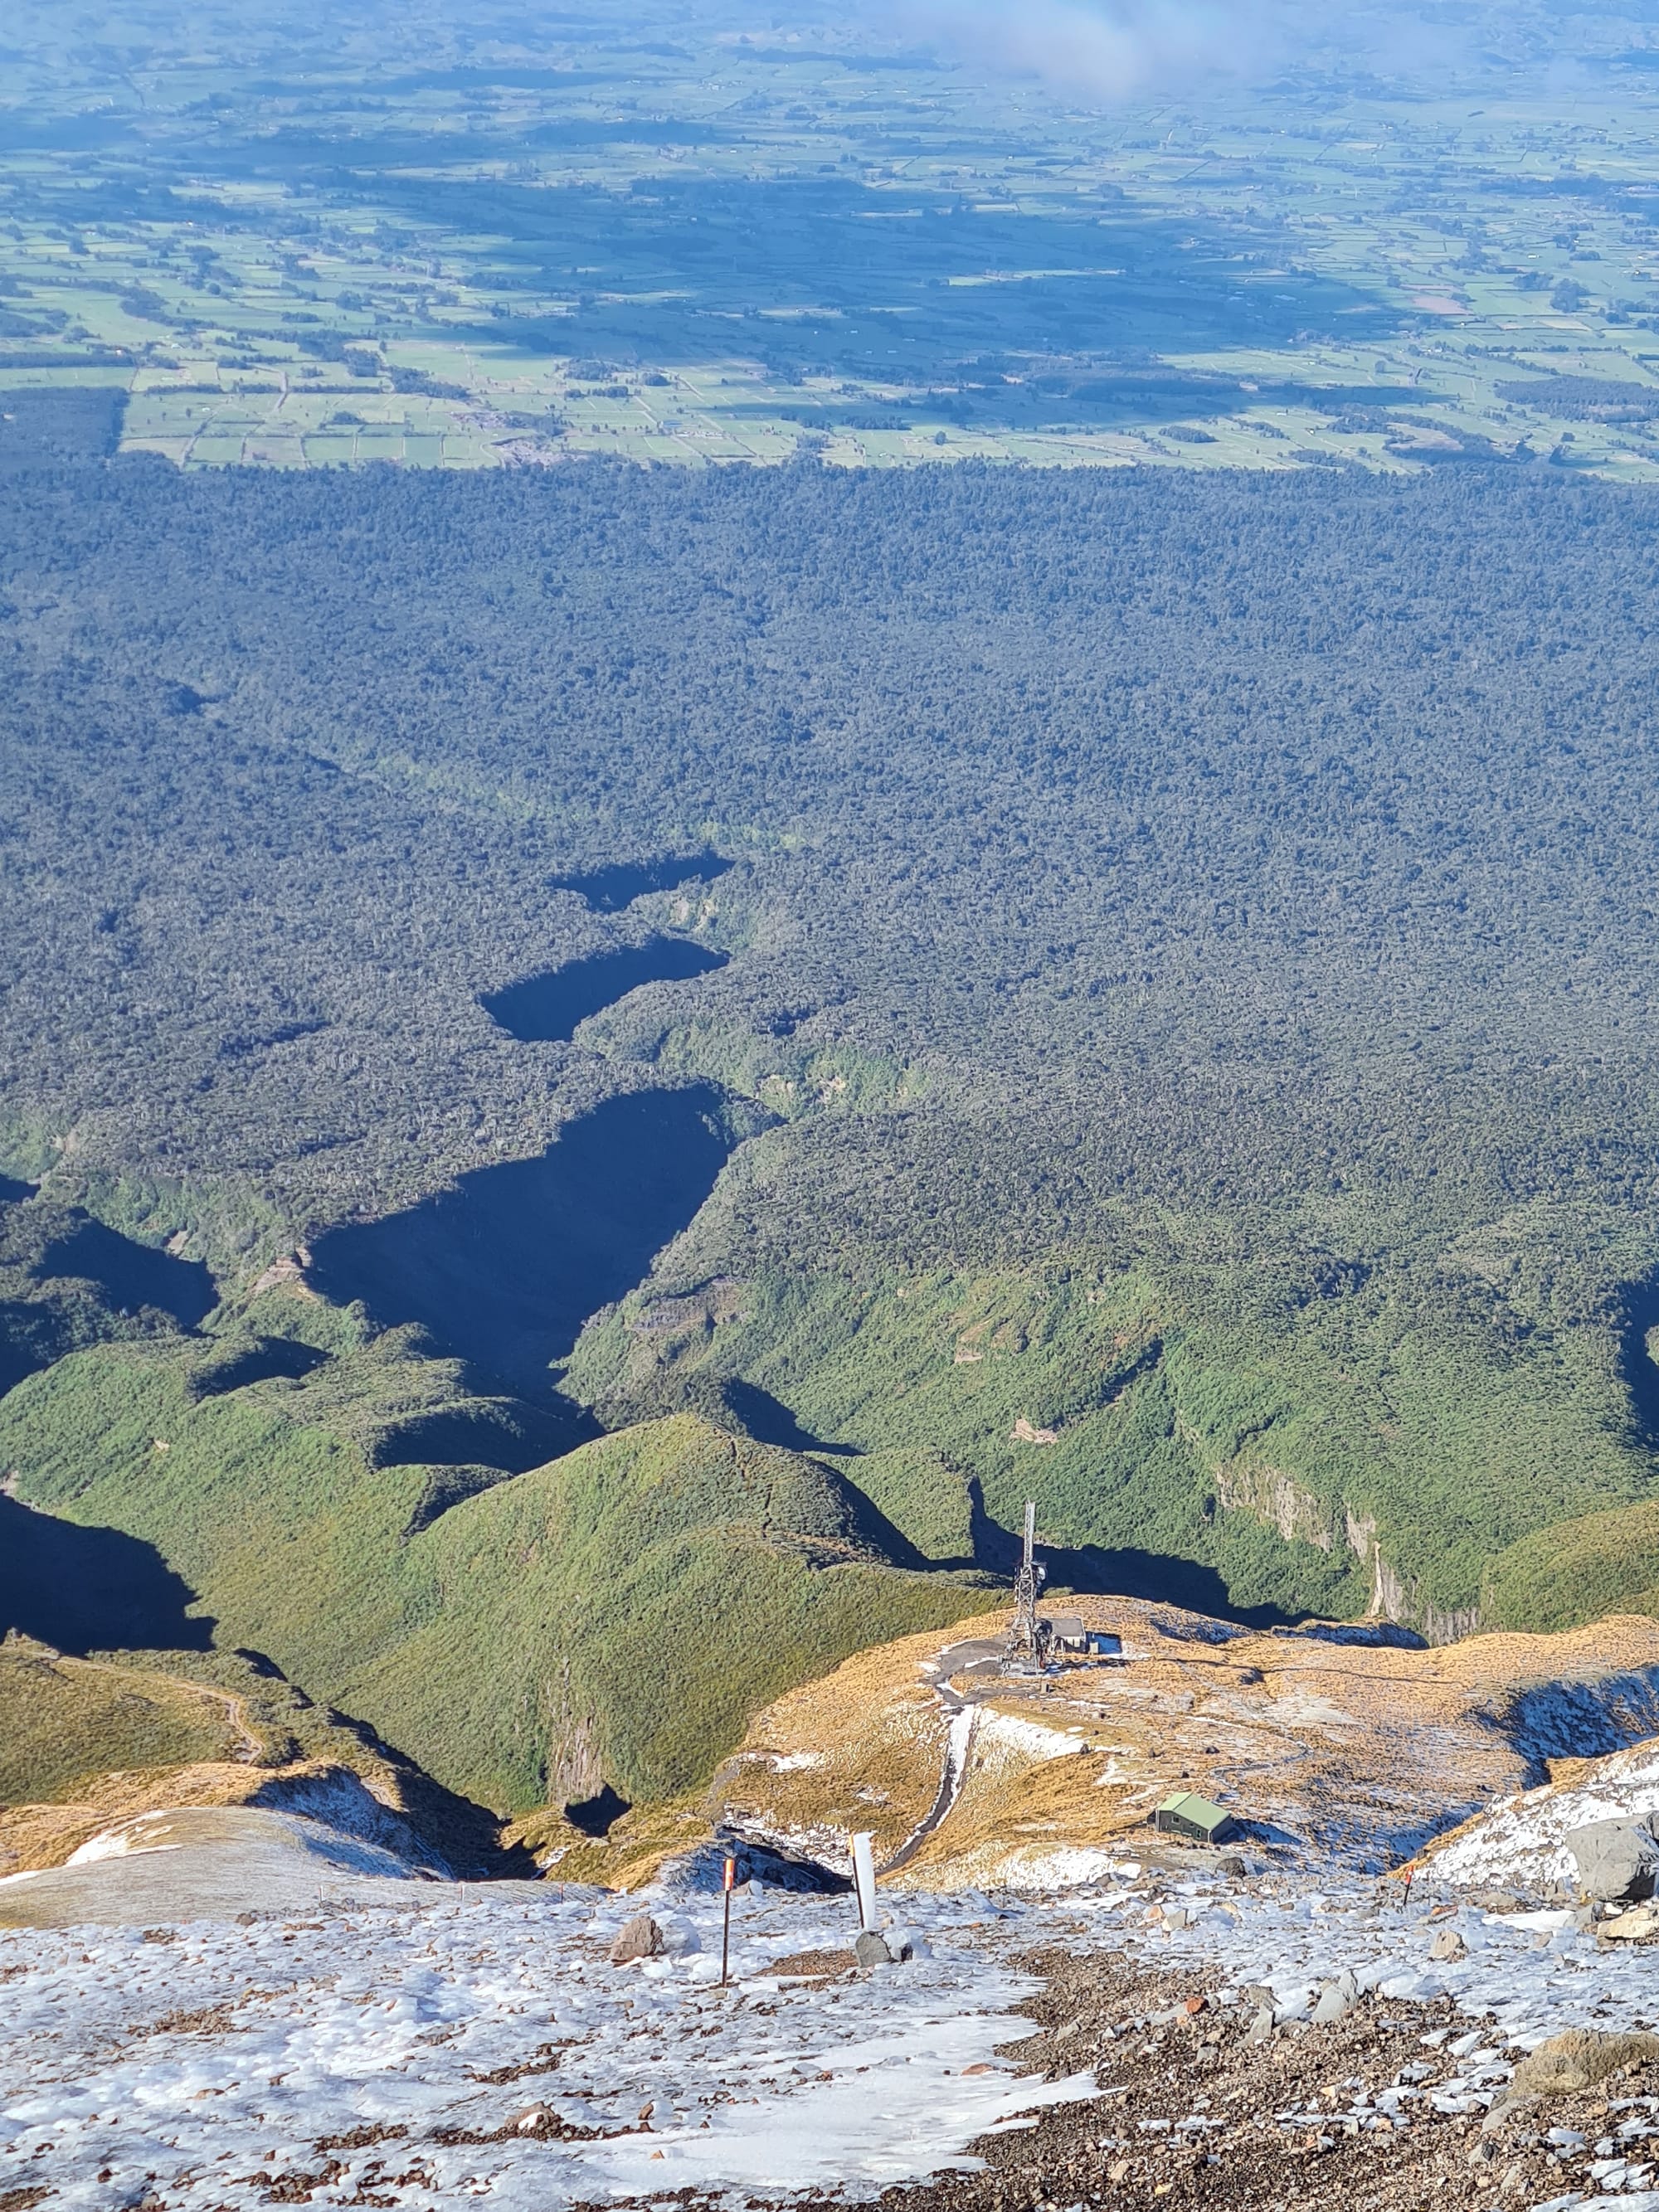 Hike up Mount Taranaki